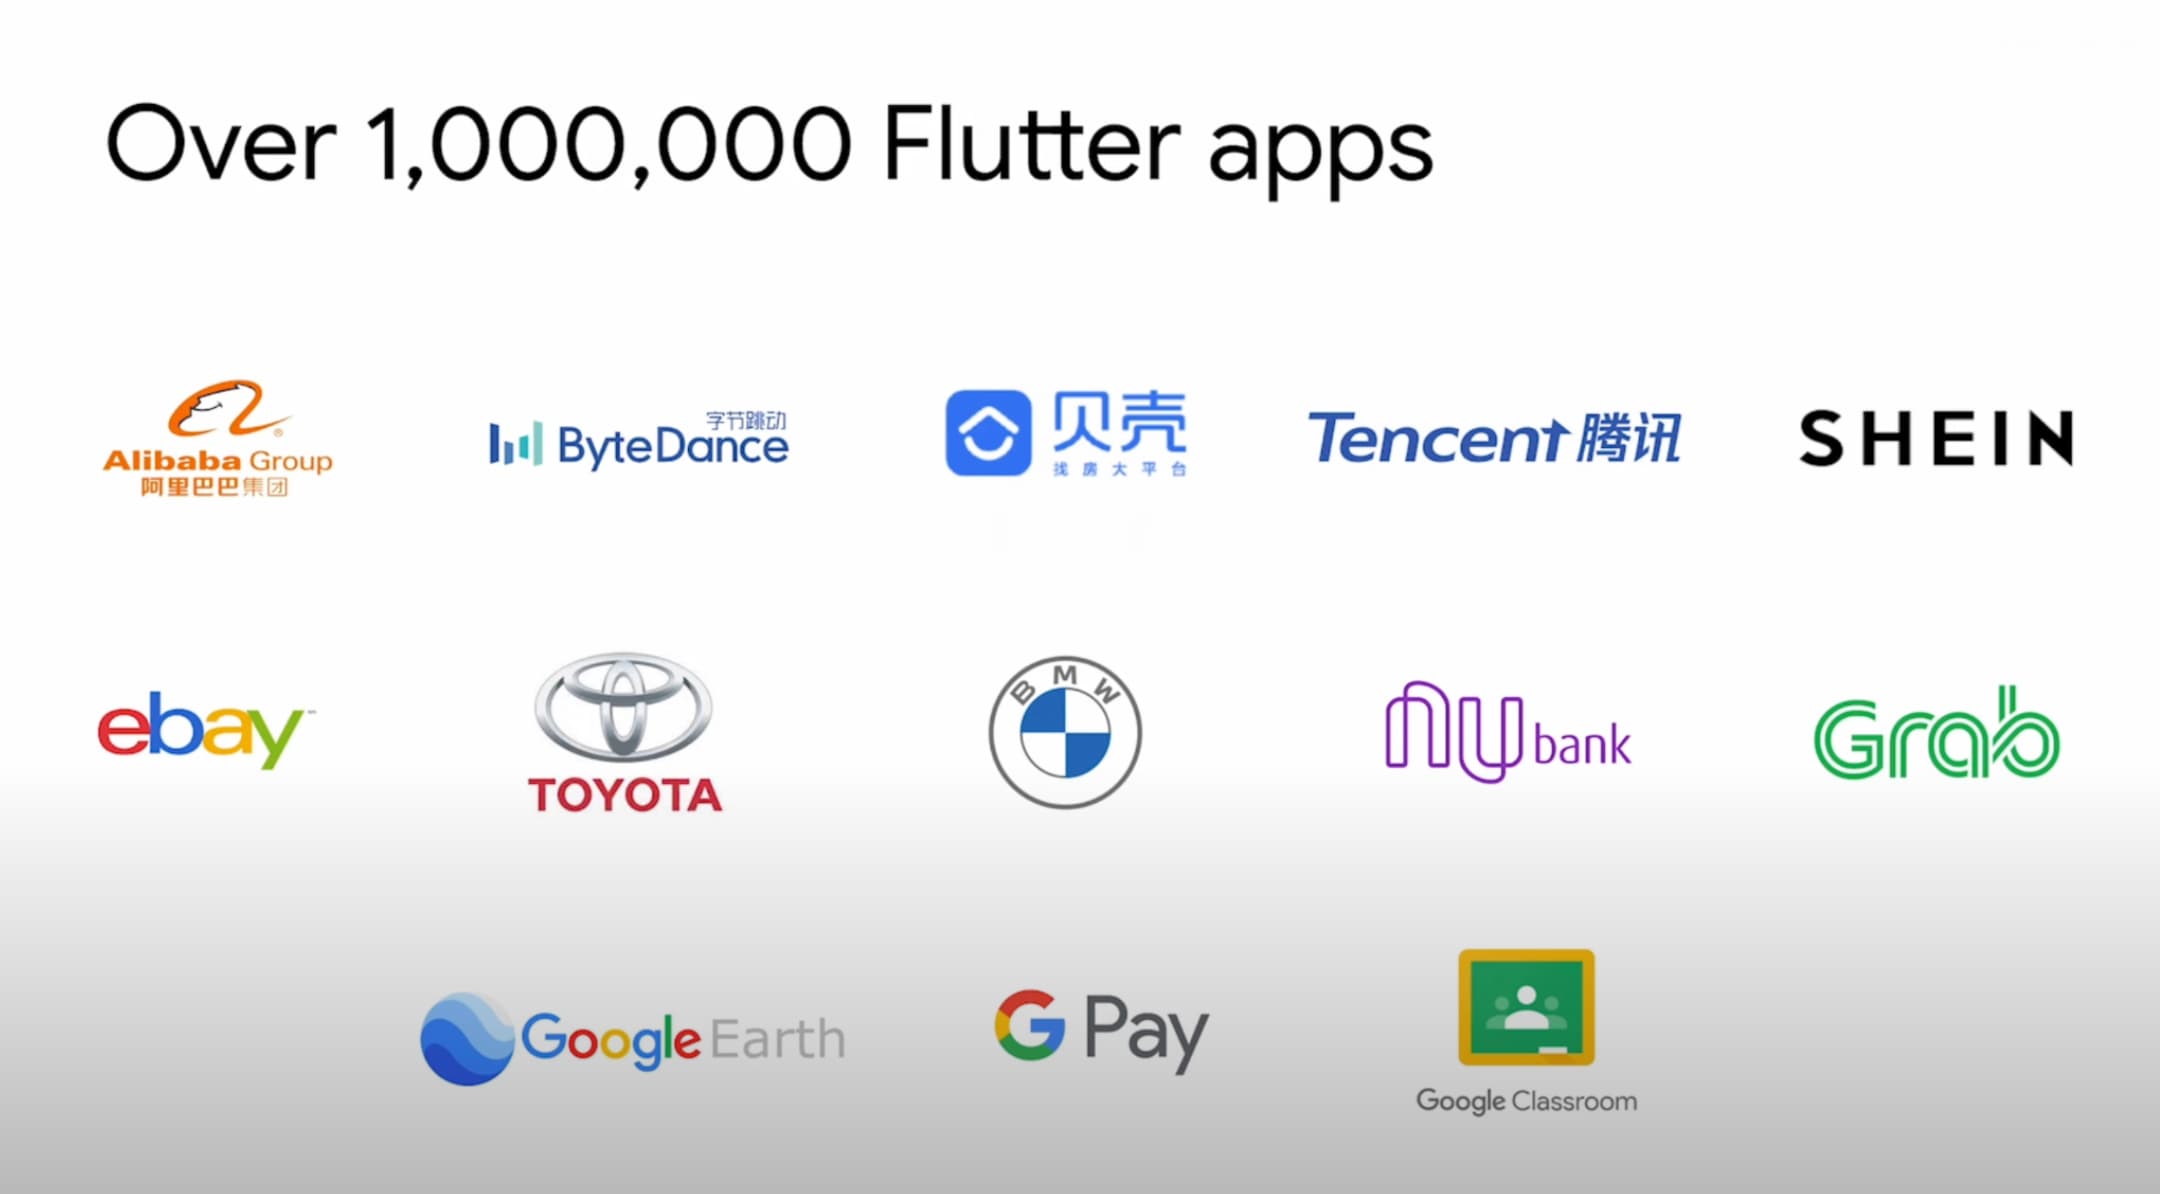 Over 1 million Flutter apps in production